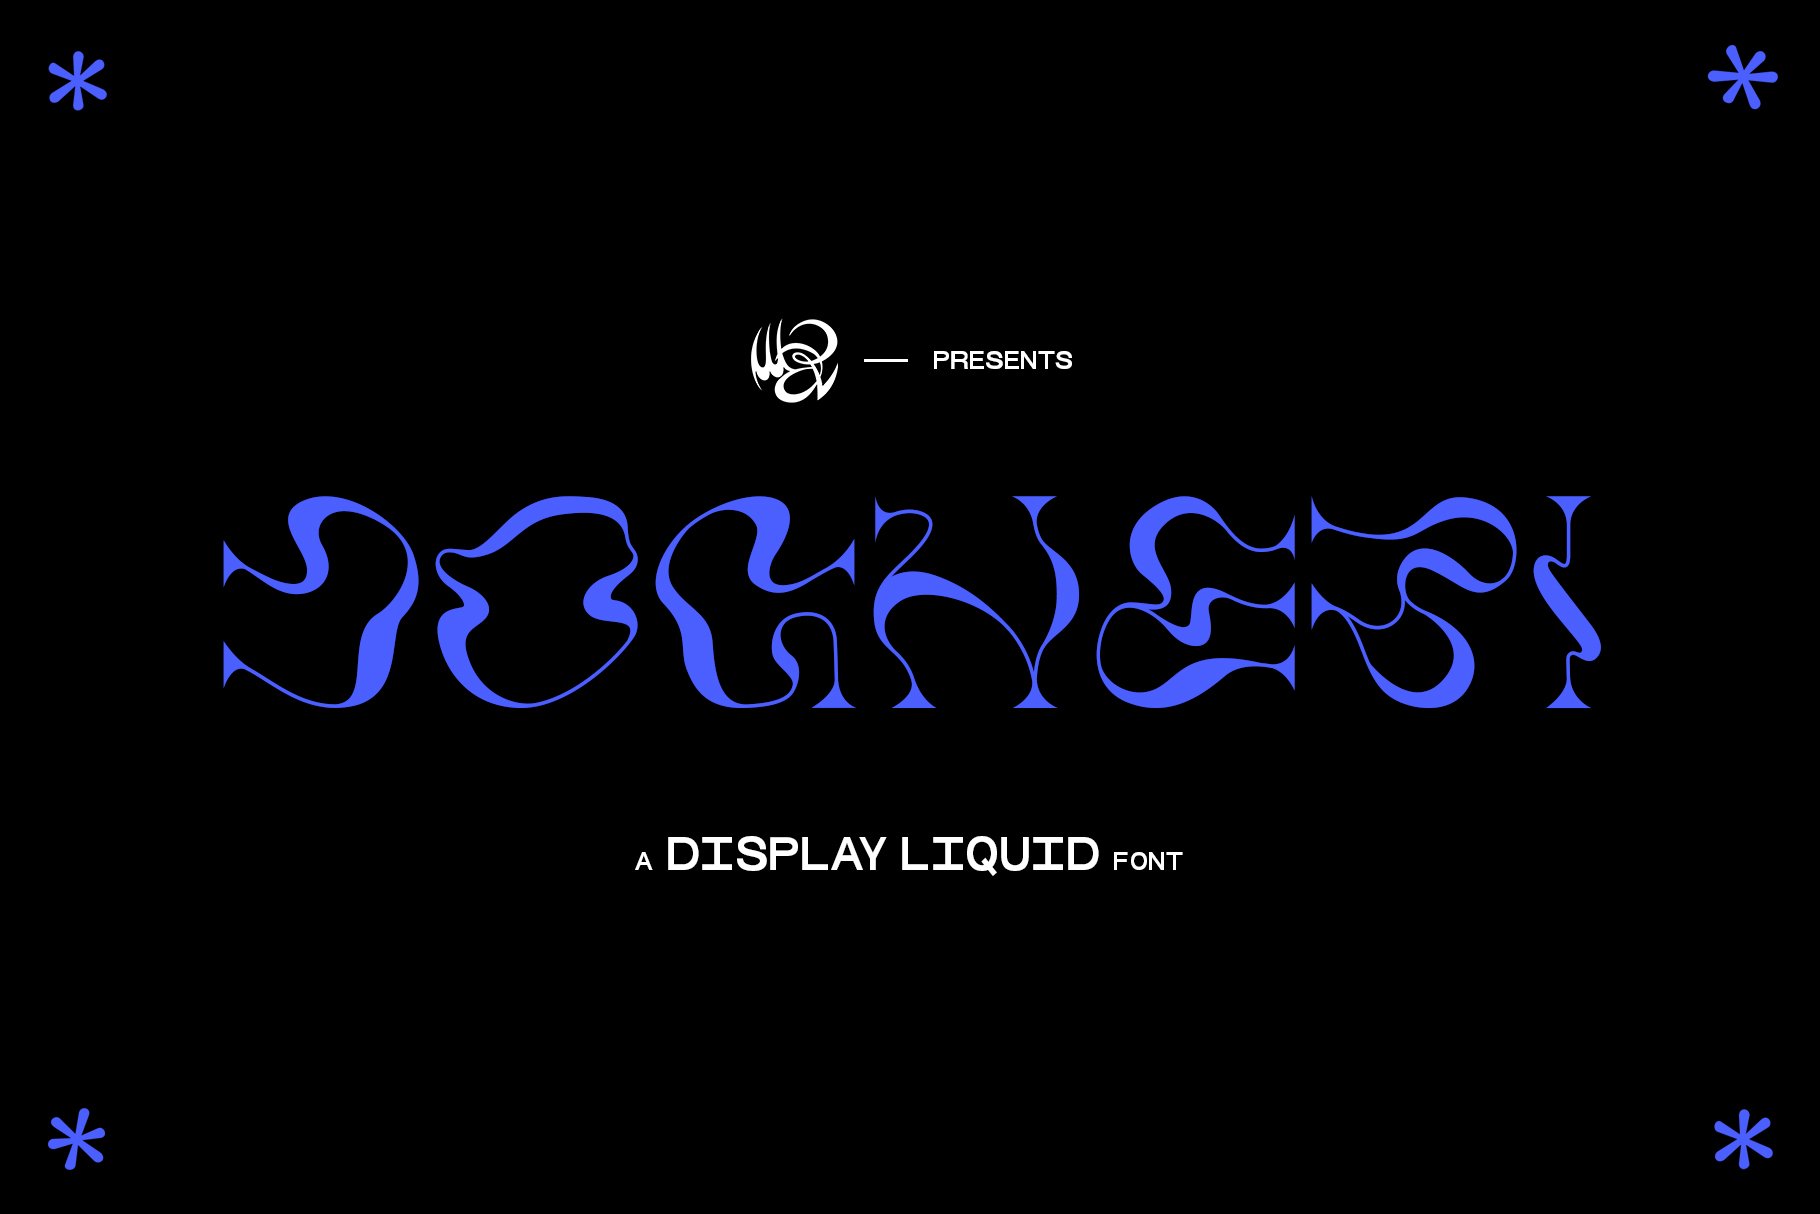 DOGHEBI (Display Liquid Typeface) cover image.